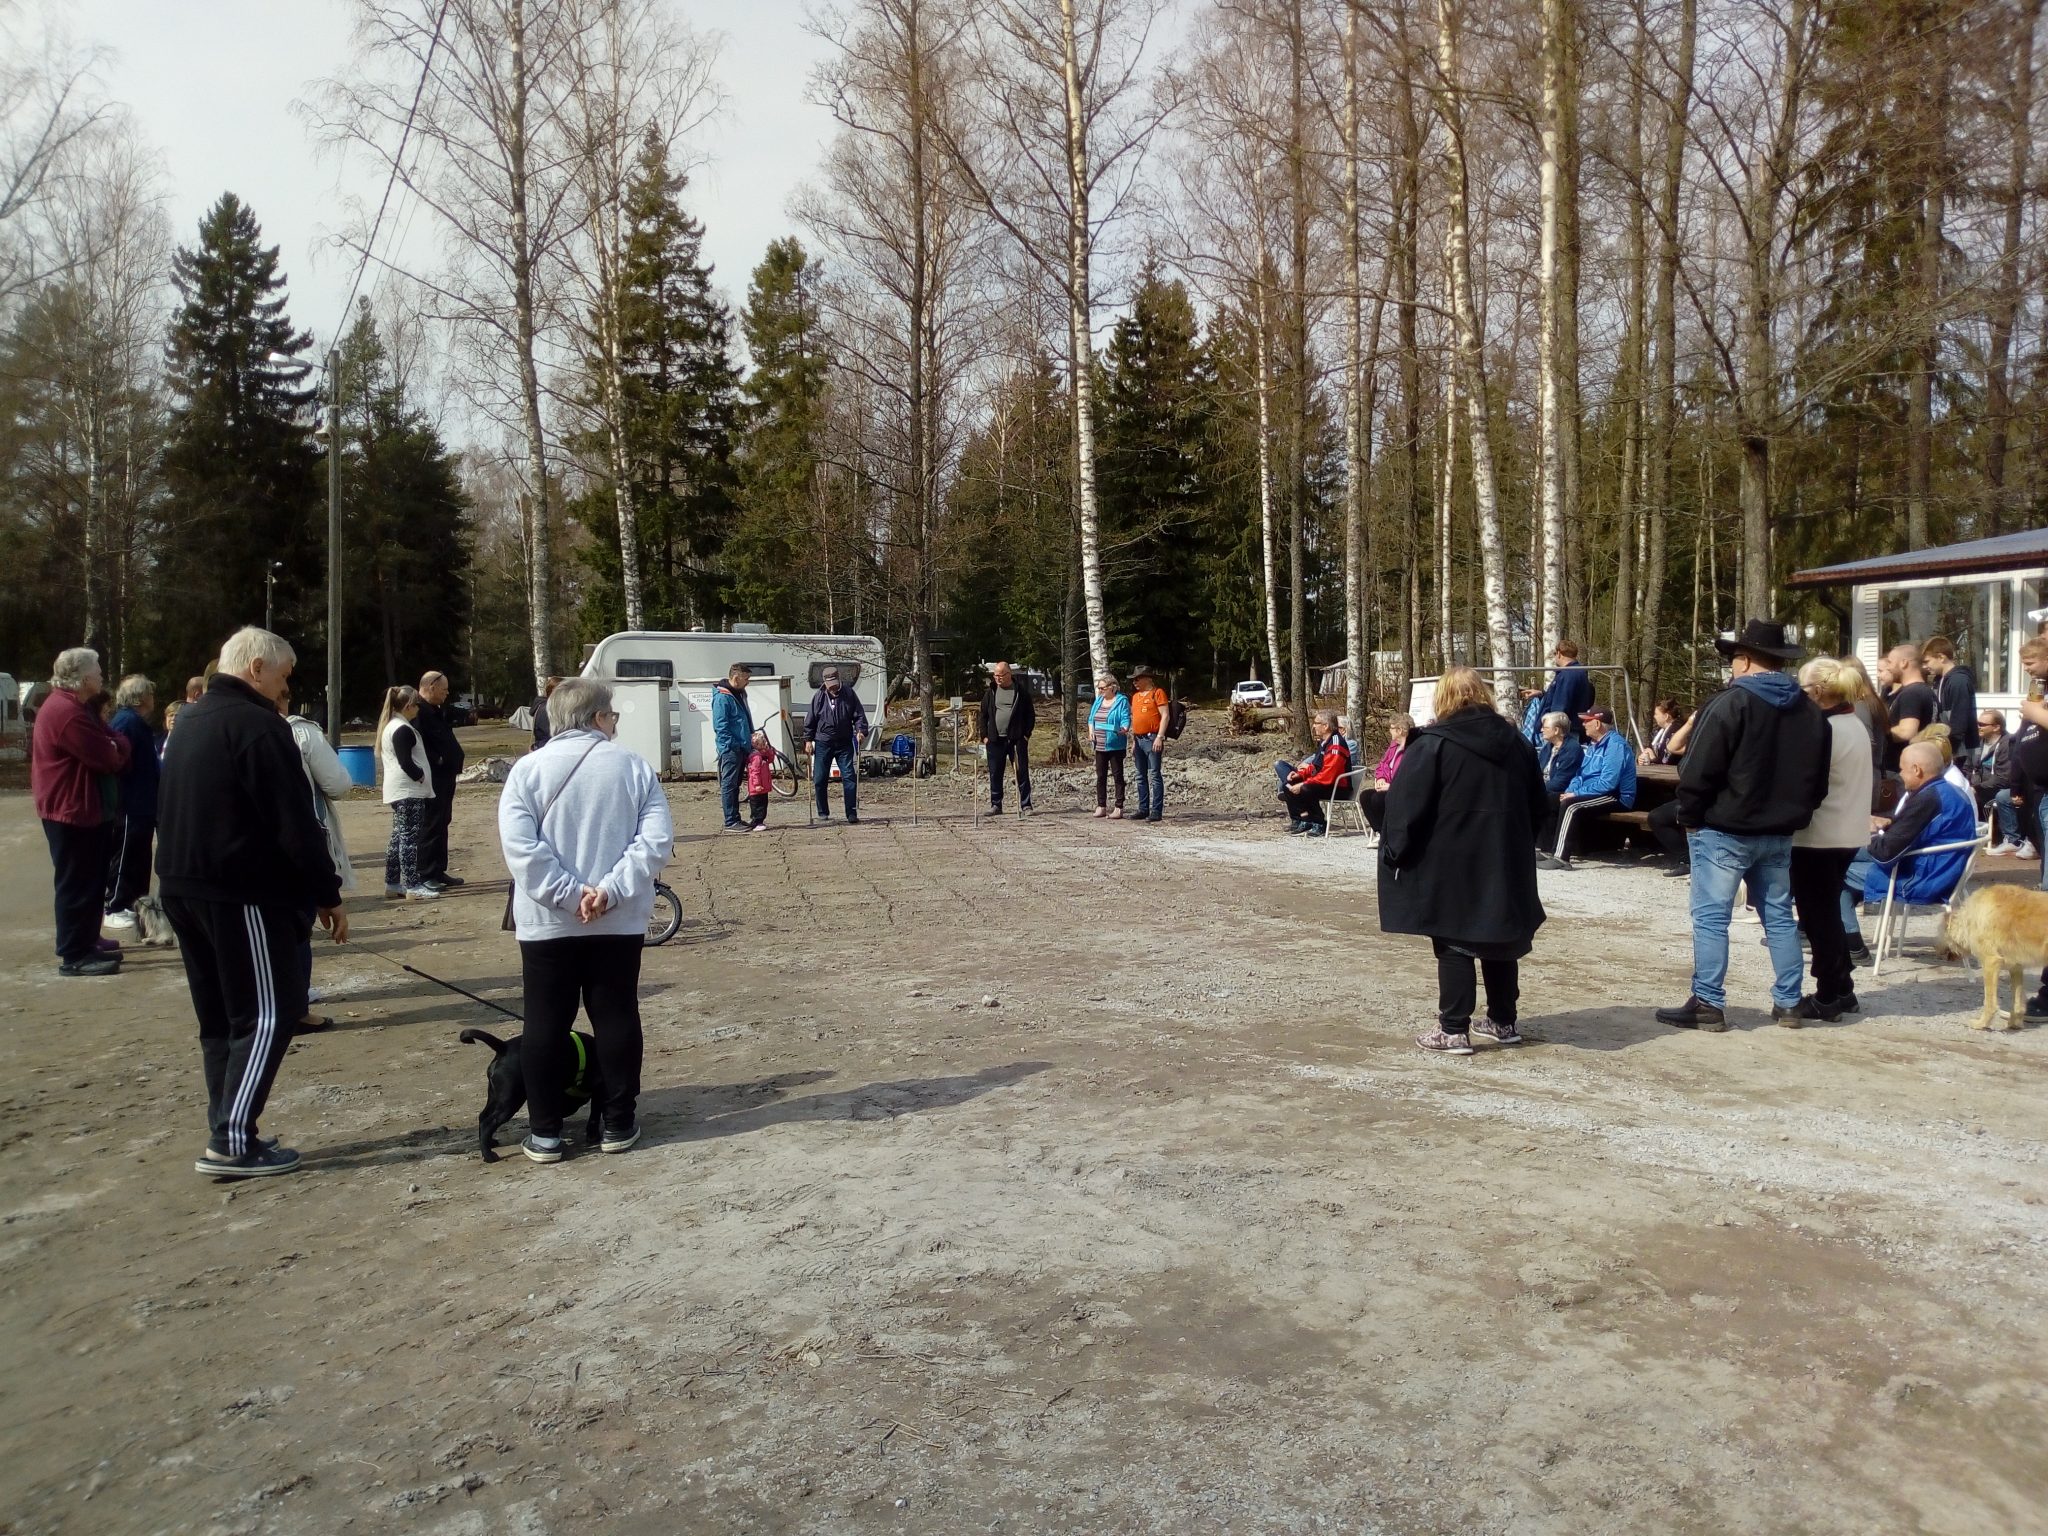 The people of Kesäniemi